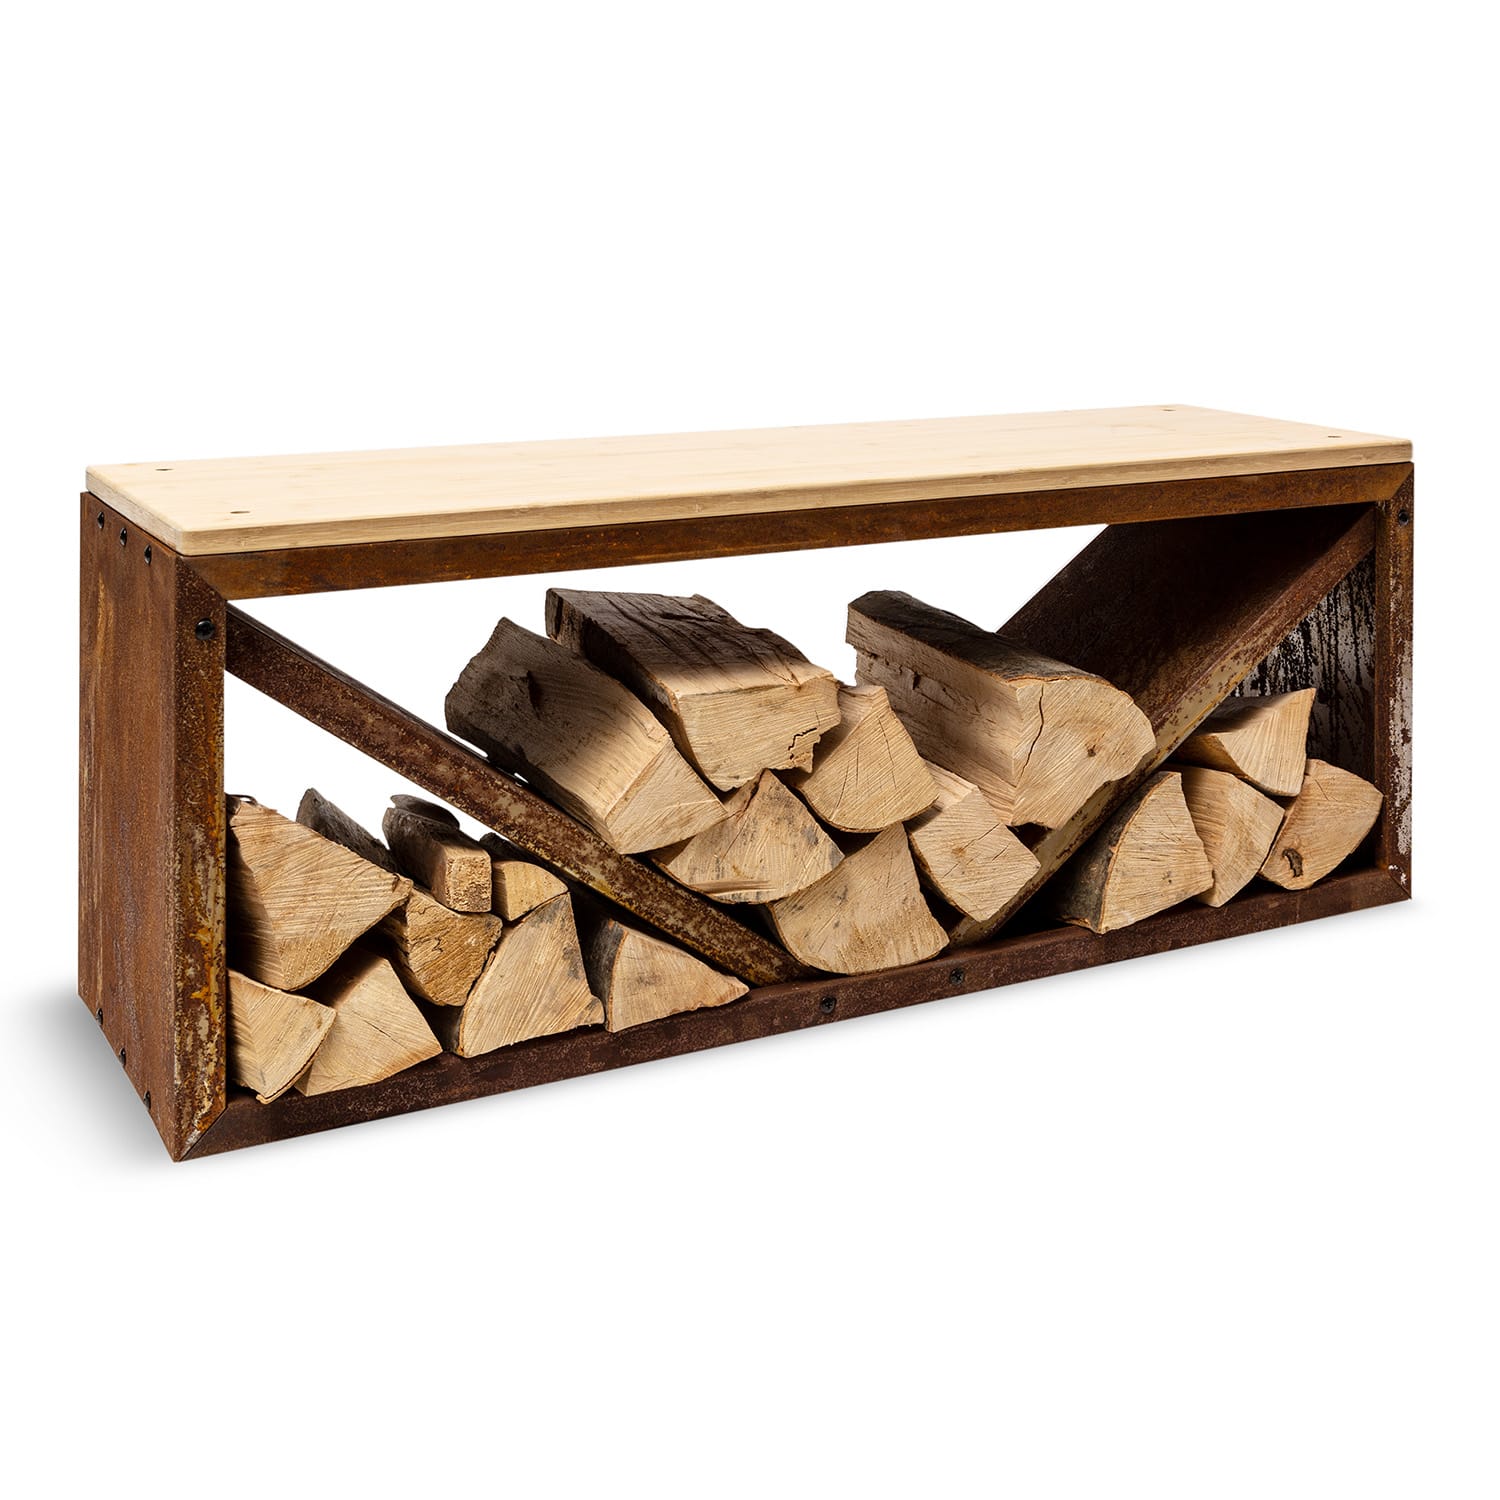 E-shop Blumfeldt Kindlewood L Rust, stojan na drevo, lavička, 104 × 40 × 35 cm, bambus, zinok